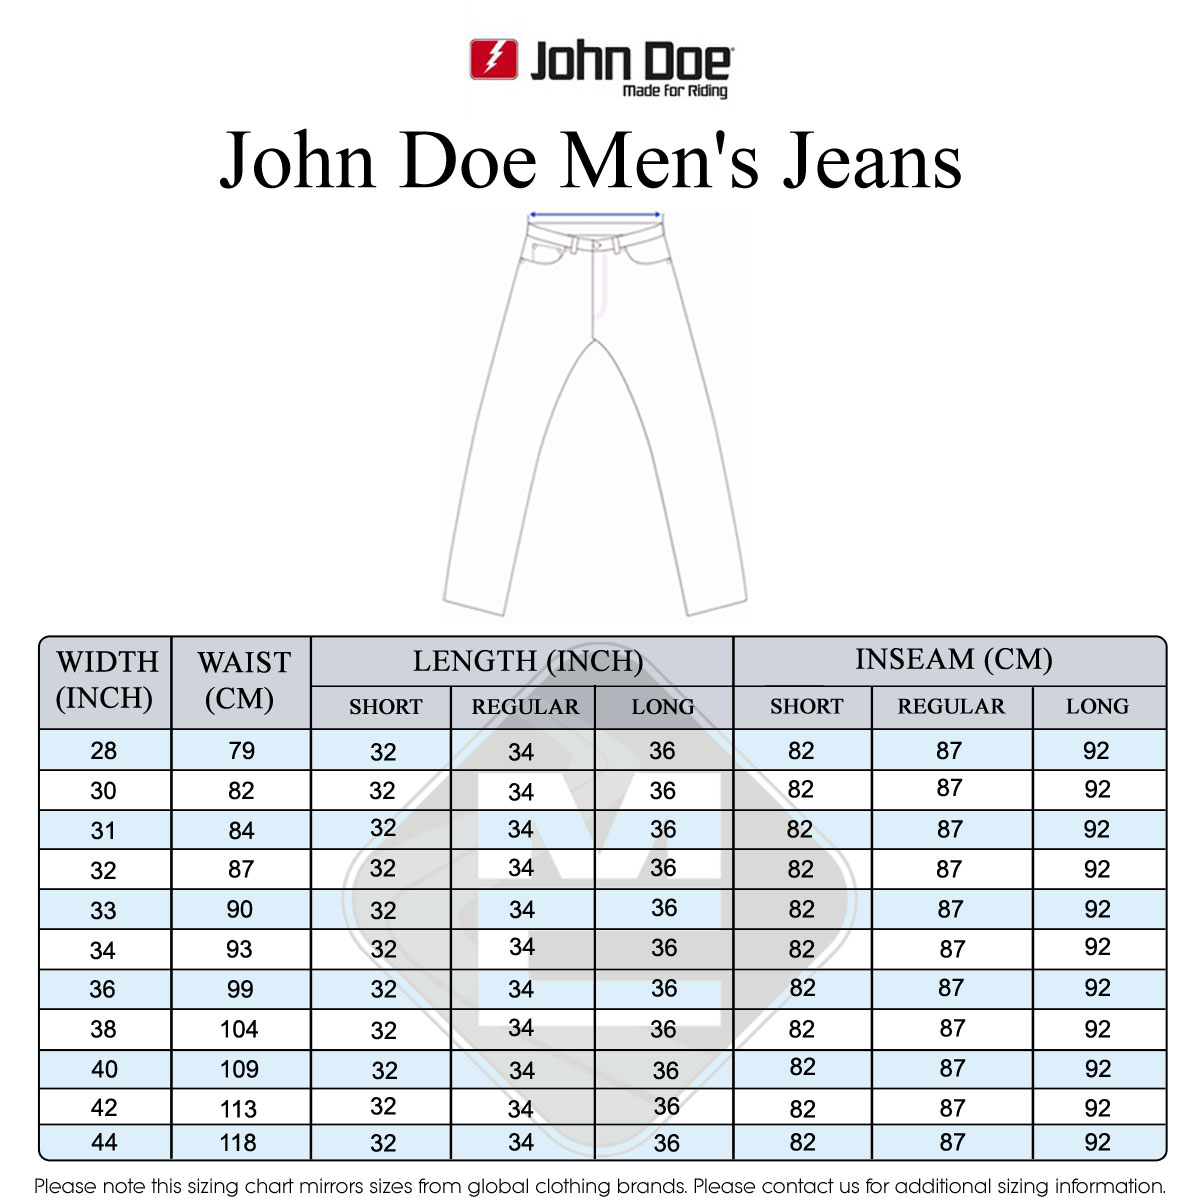 John Doe Men's Size Guide